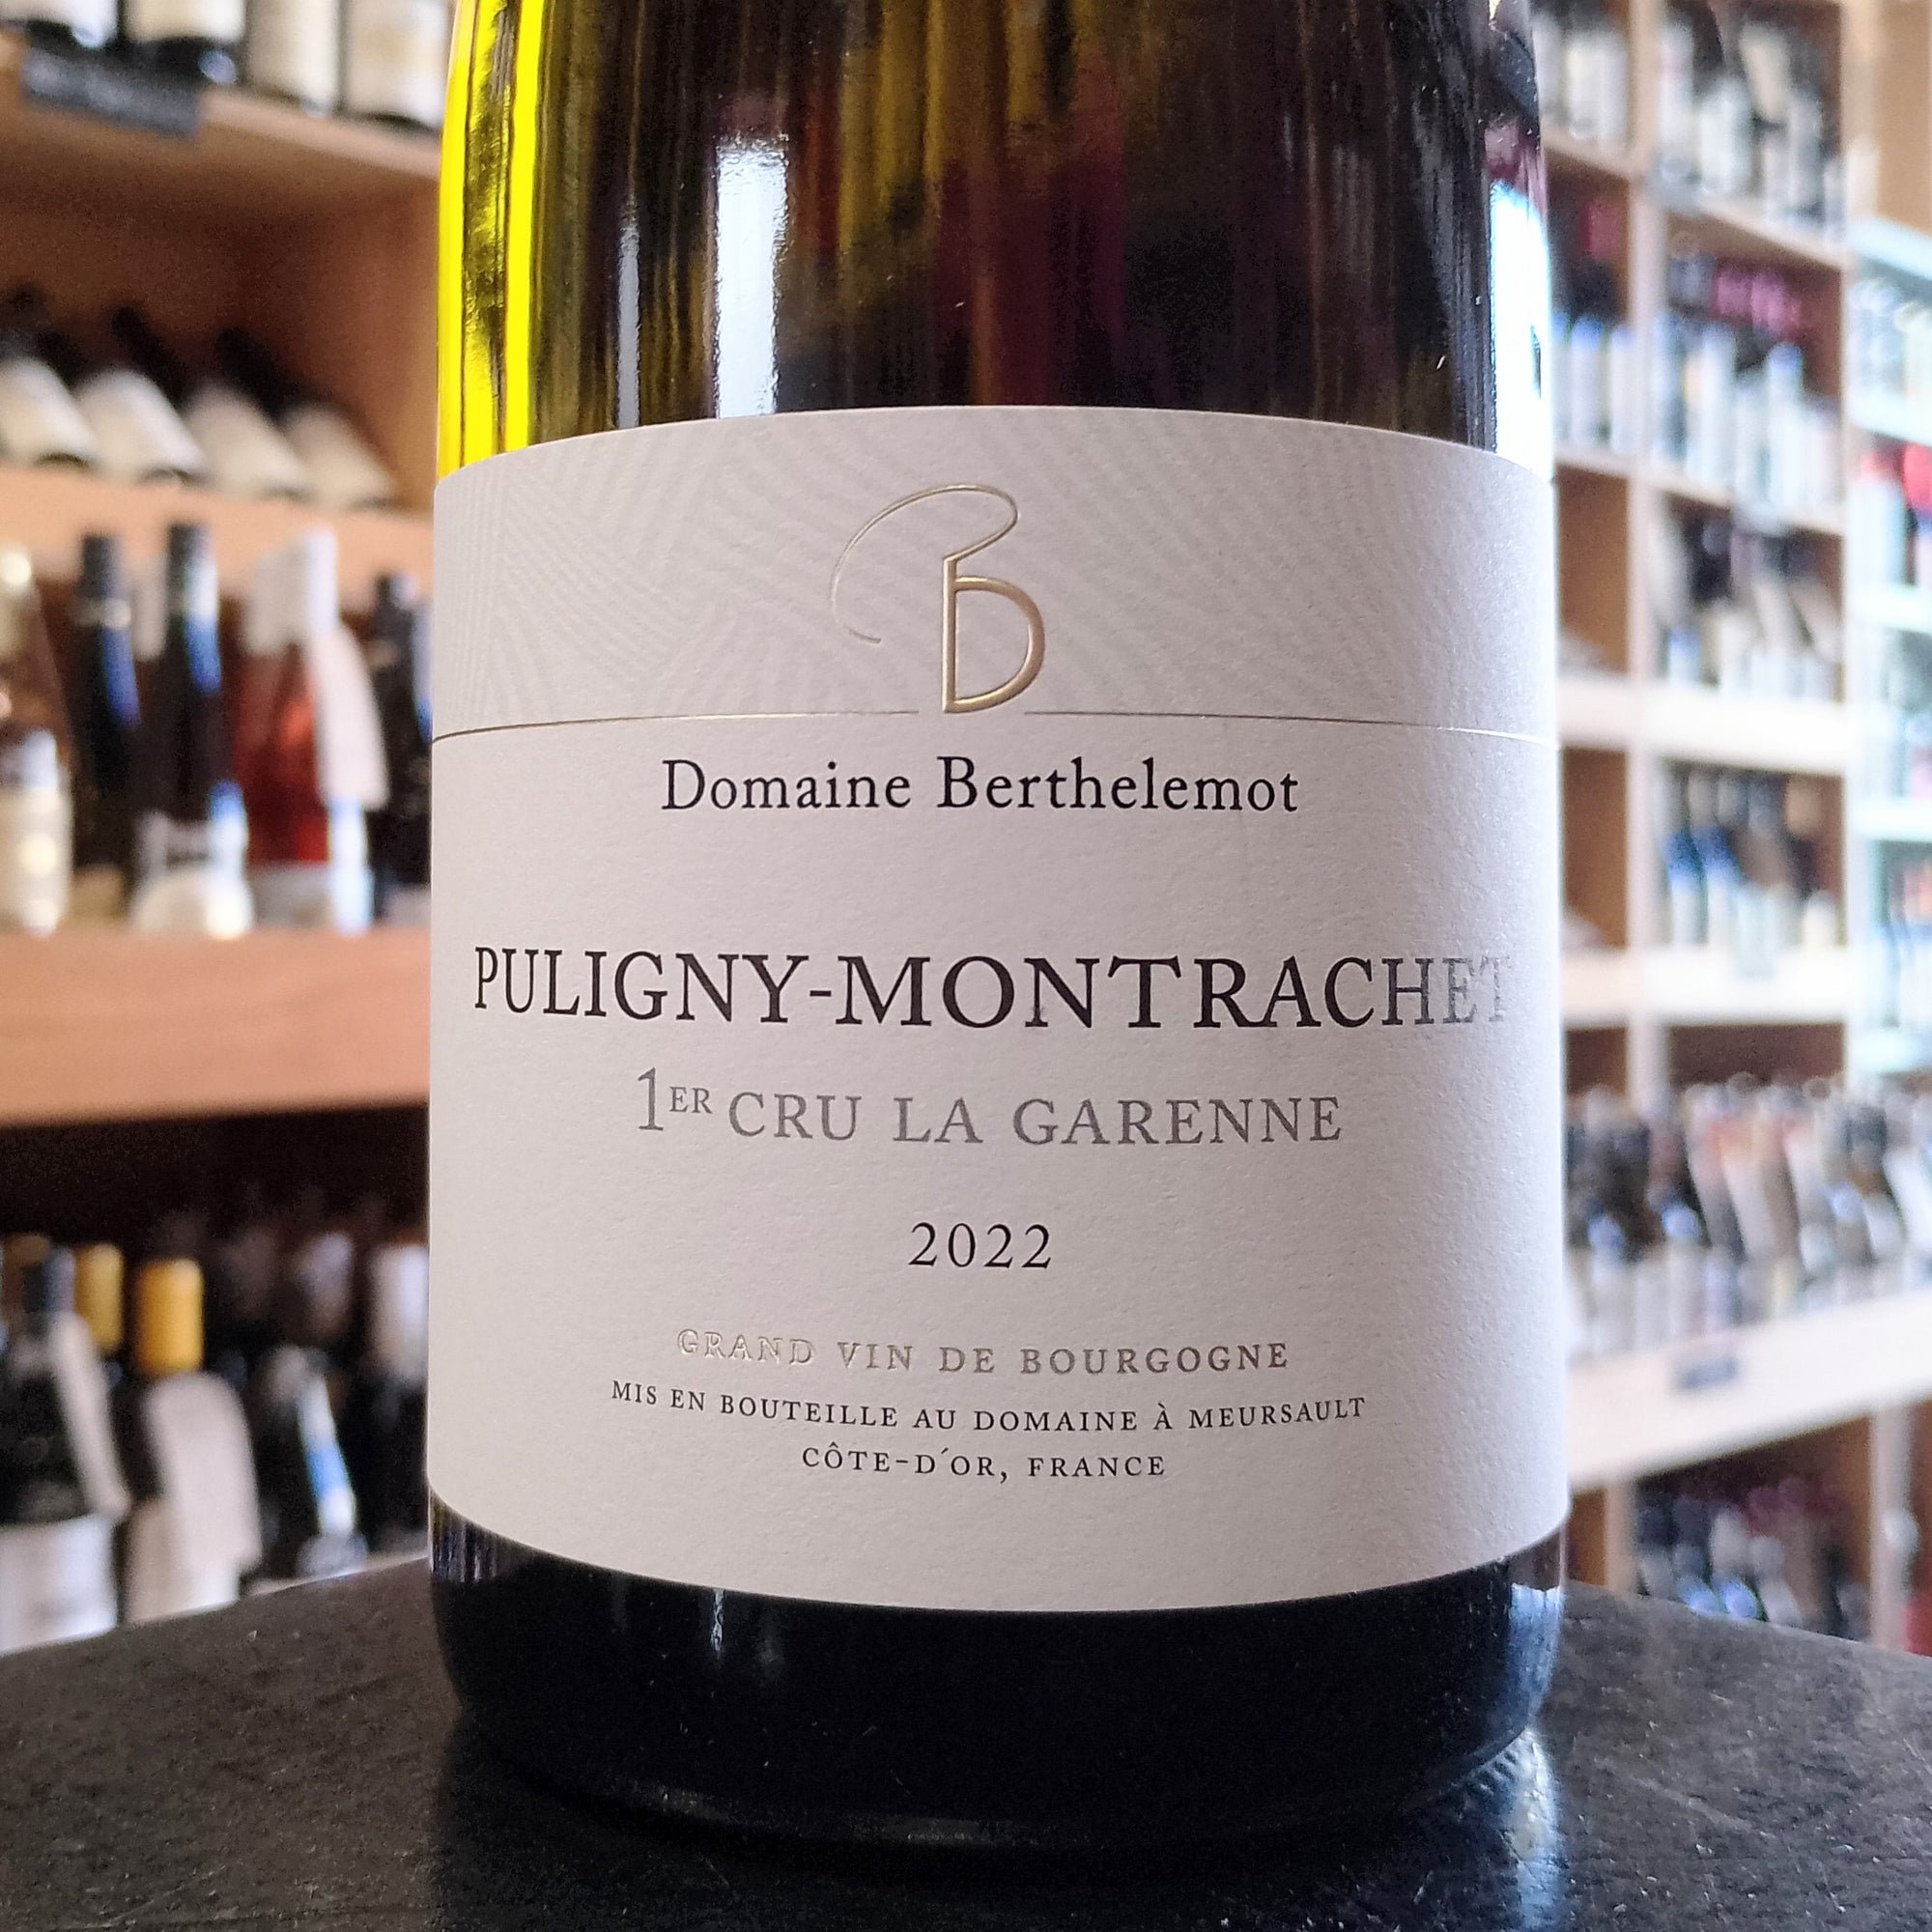 Domaine Berthelemot Puligny-Montrachet 1er Cru La Garenne 2022 - Butler's Wine Cellar Brighton